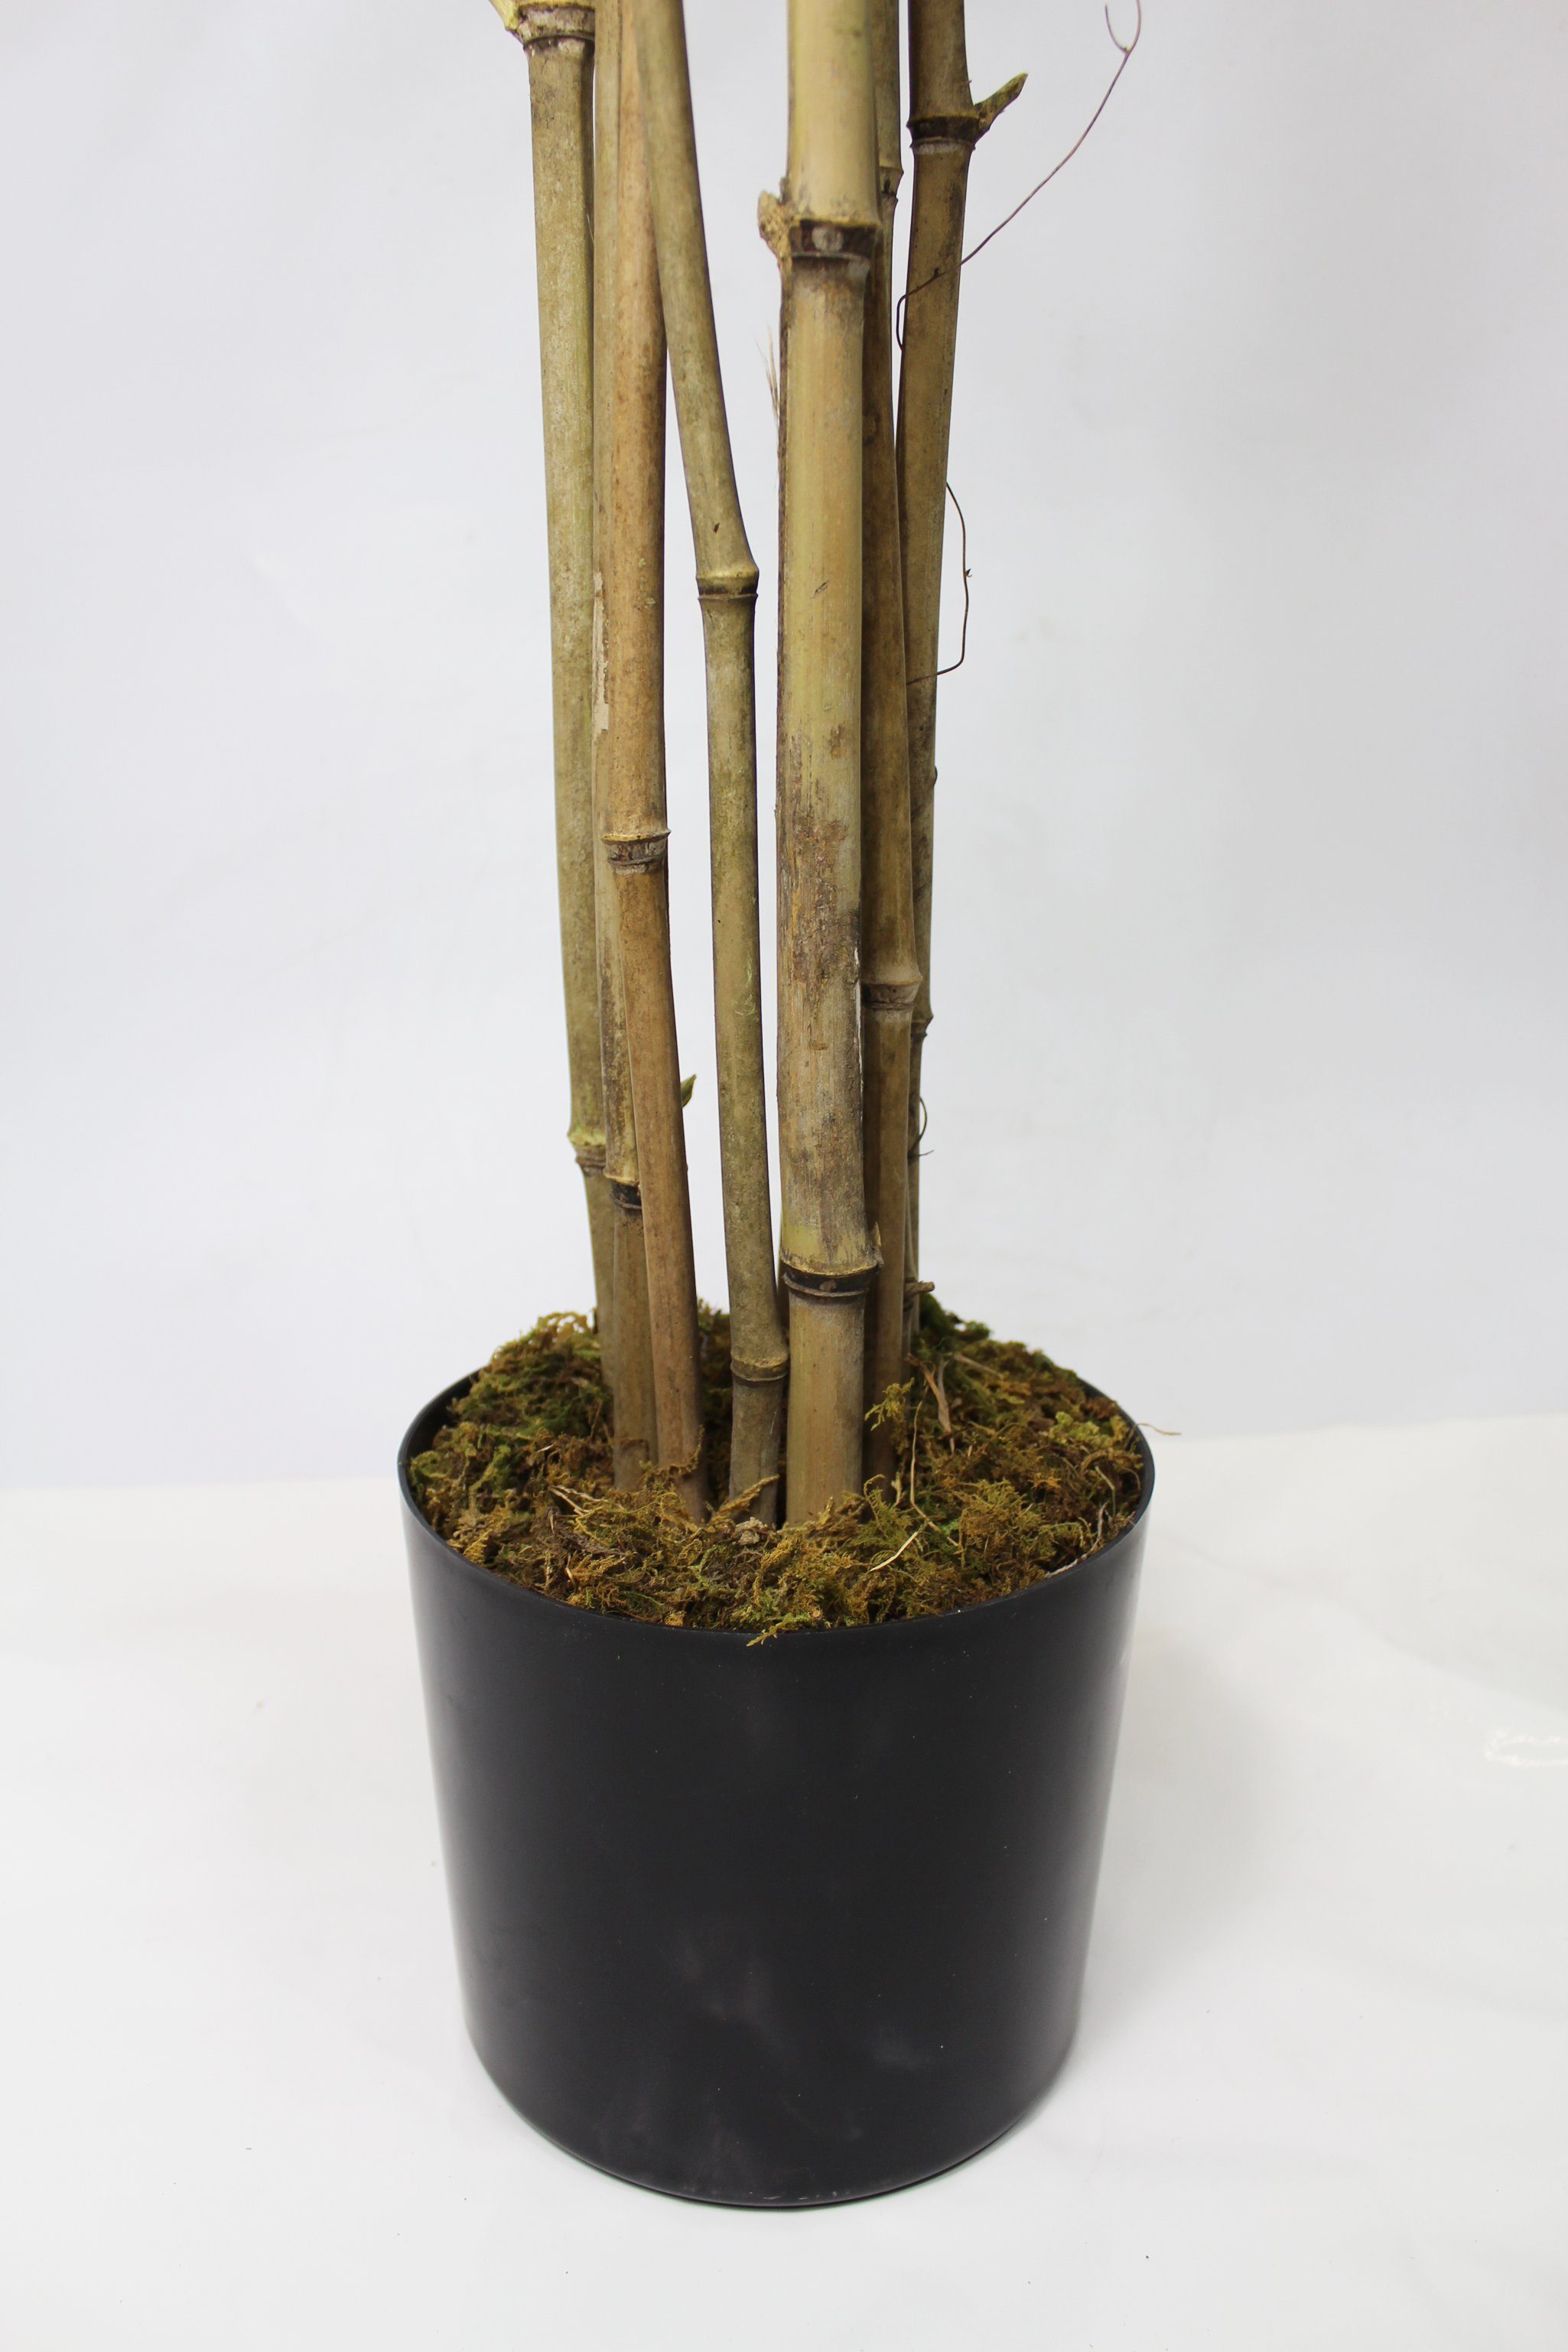 190 Kunstpflanze 1400 künstlicher Blätter Höhe Bambus Bambus, im Real-Touch fertig Arnusa, Topf Kunstbambus cm, Deluxe beschwerten